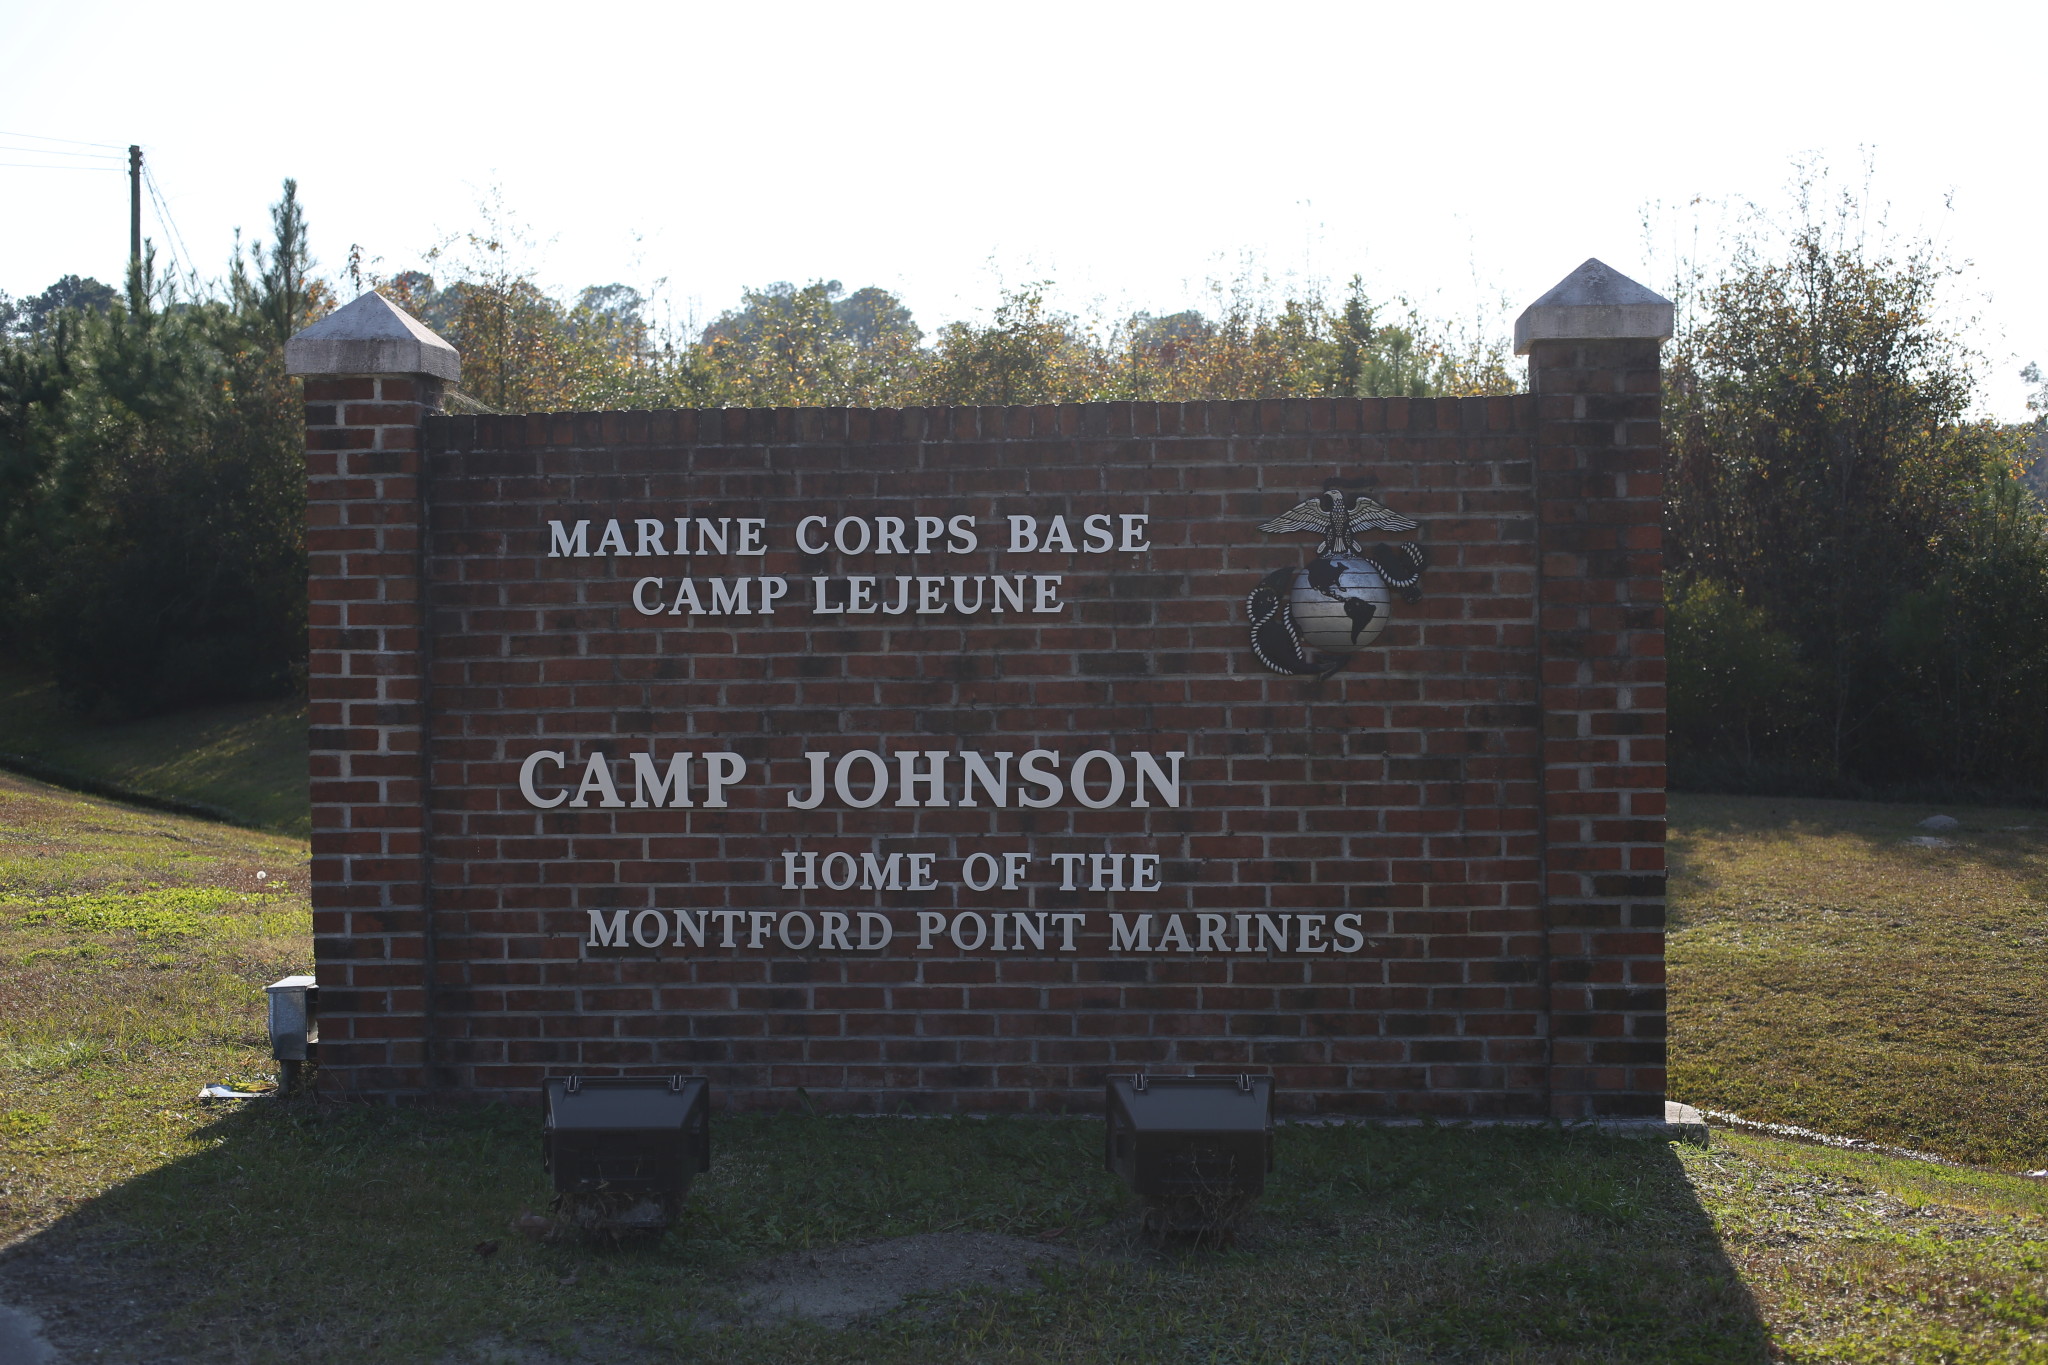 Camp Johnson